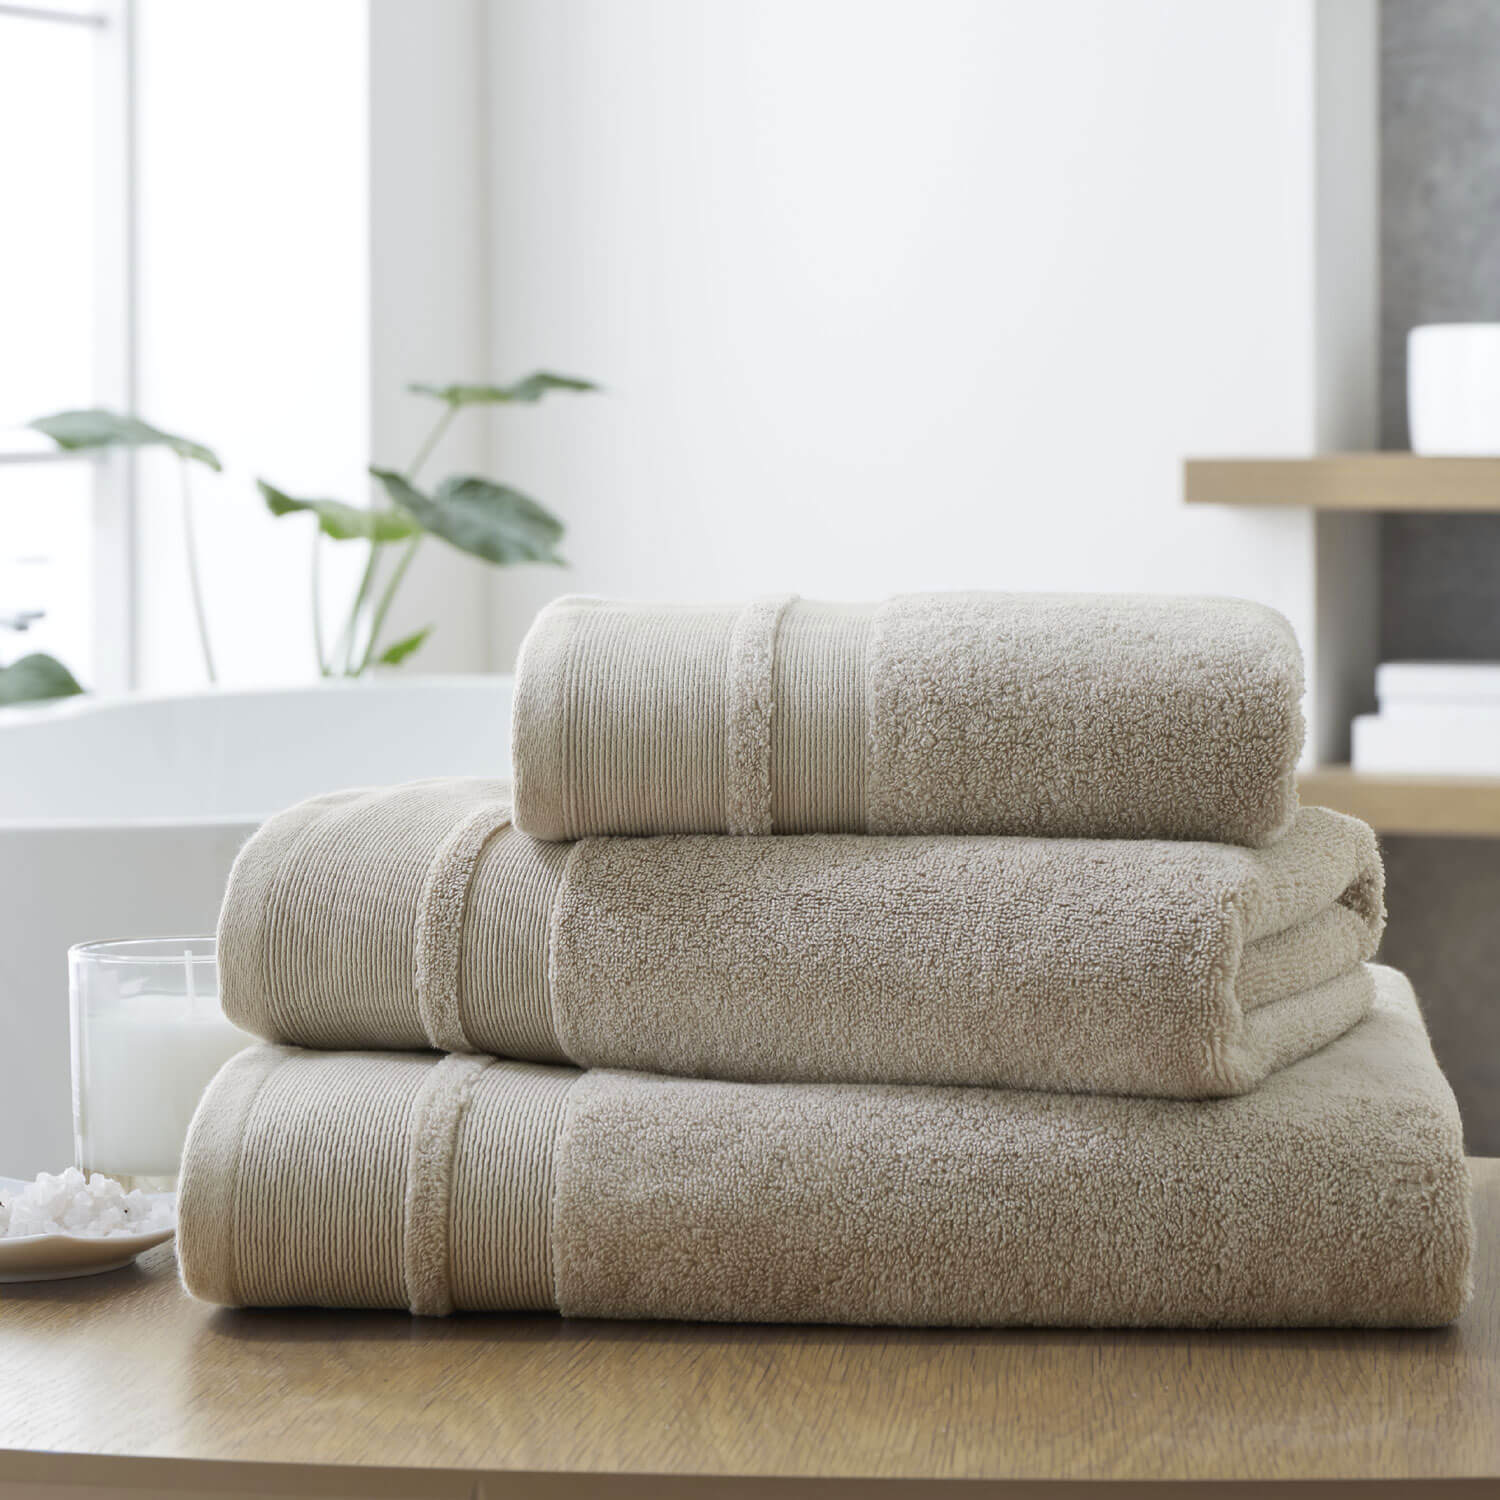 Dorma Zero Twist Cotton Modal Towel - Sand 1 Shaws Department Stores